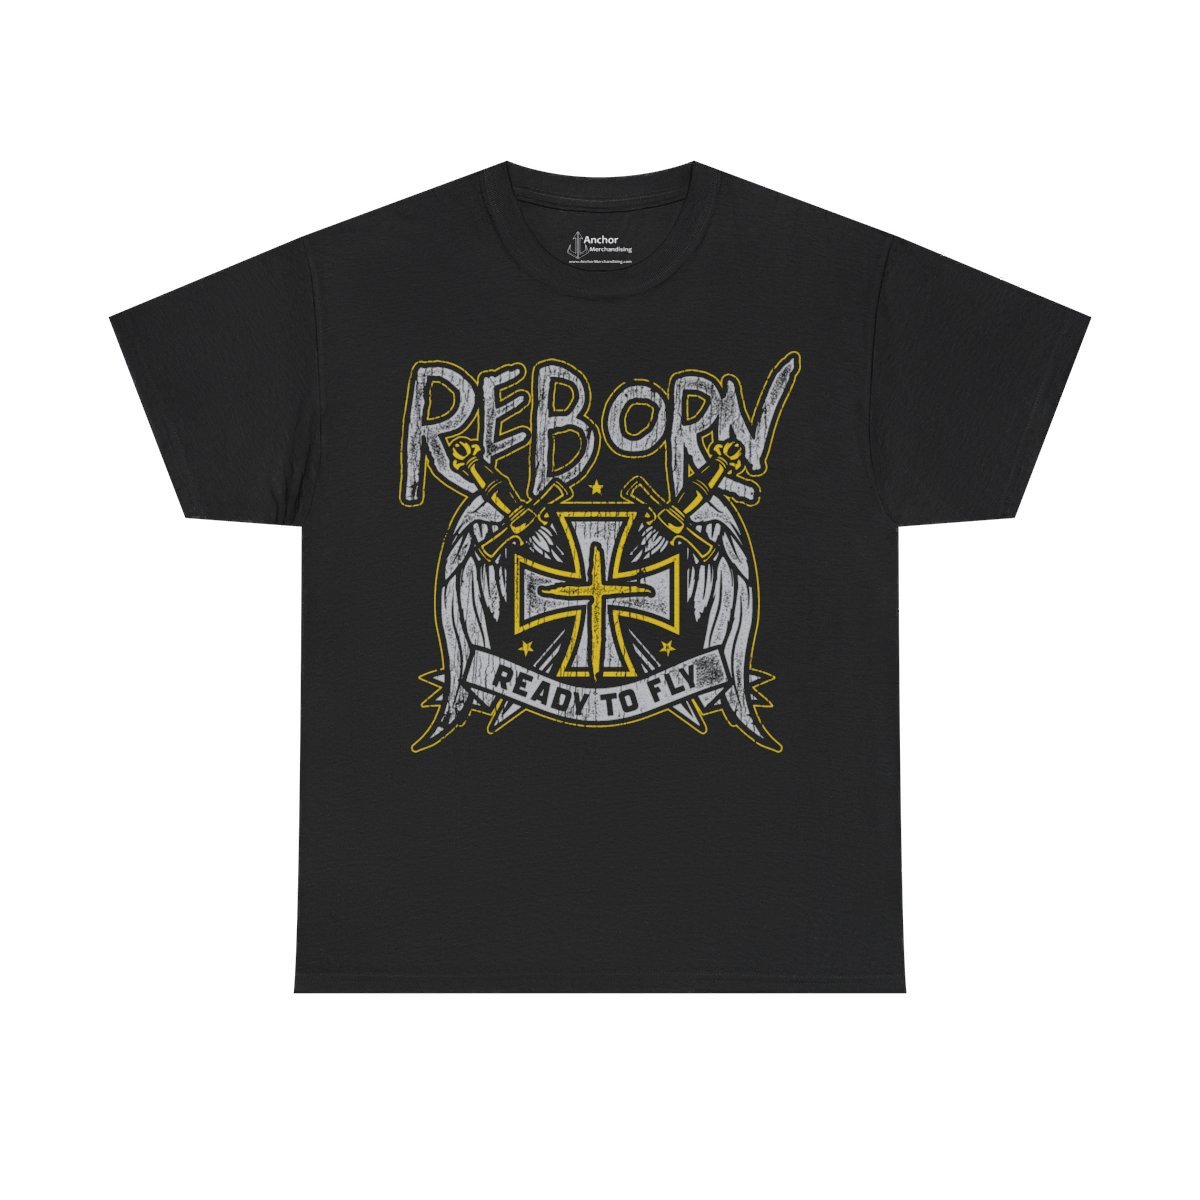 Reborn – Ready to Fly Short Sleeve Tshirt